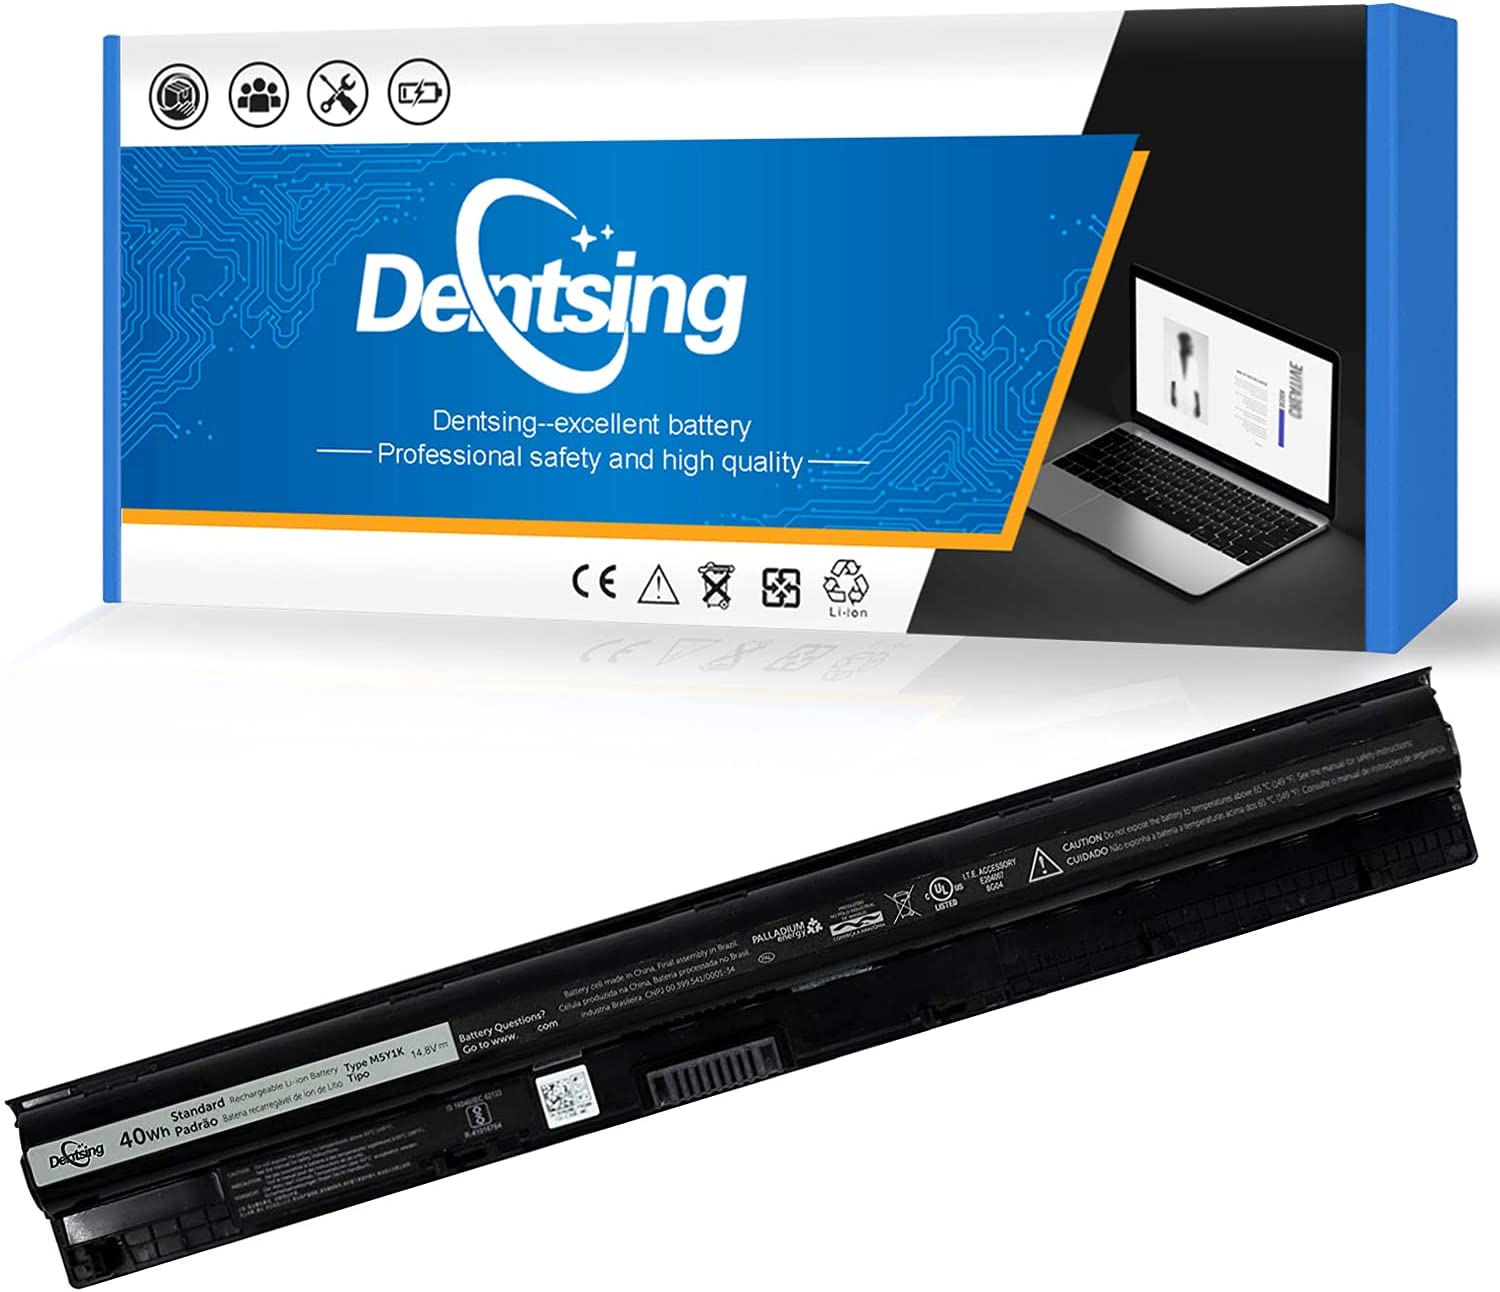 Dentsing M5Y1K Battery for Dell Inspiron 14 15 17 5000 3000 Series